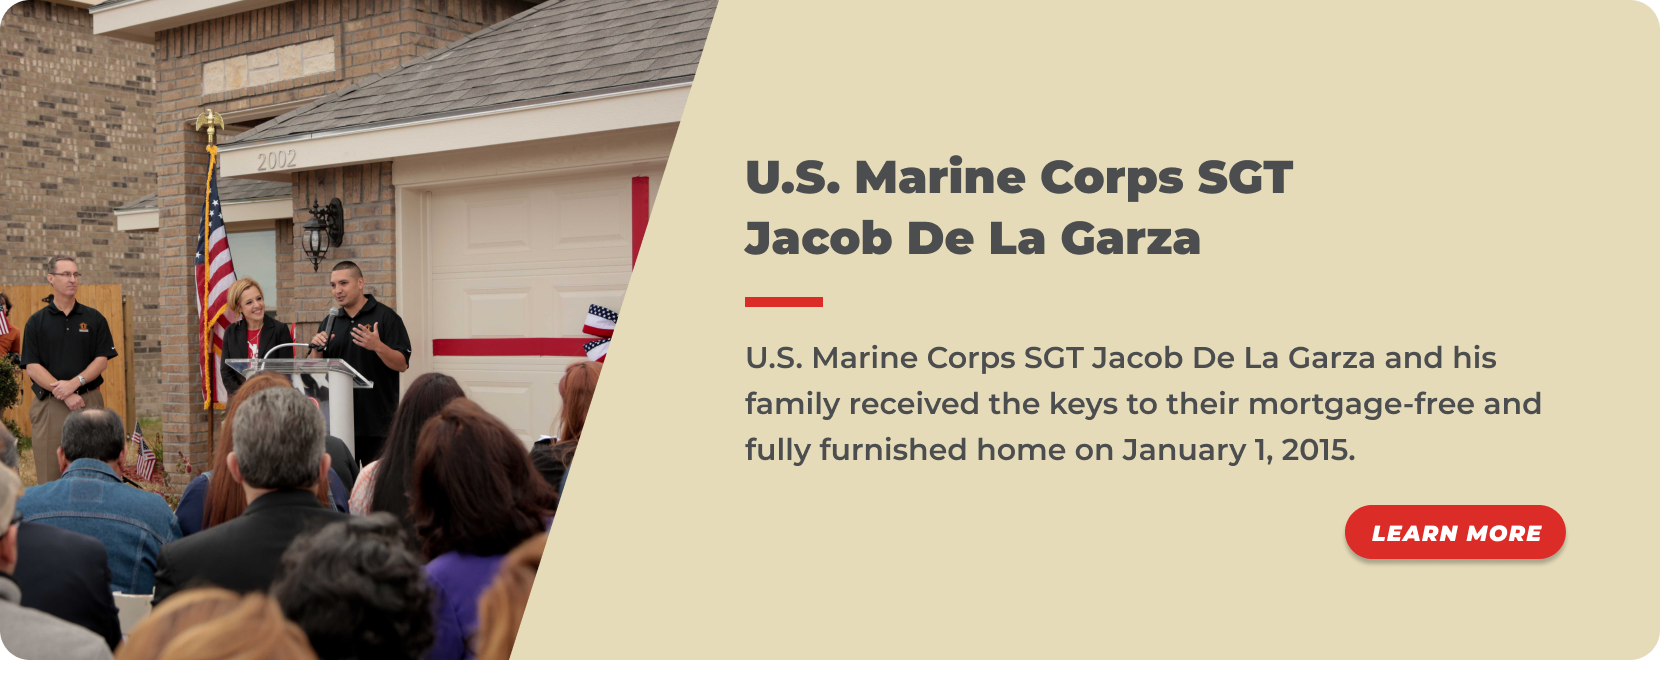 6 -U.S. Marine Corps SGT Jacob De La Garza